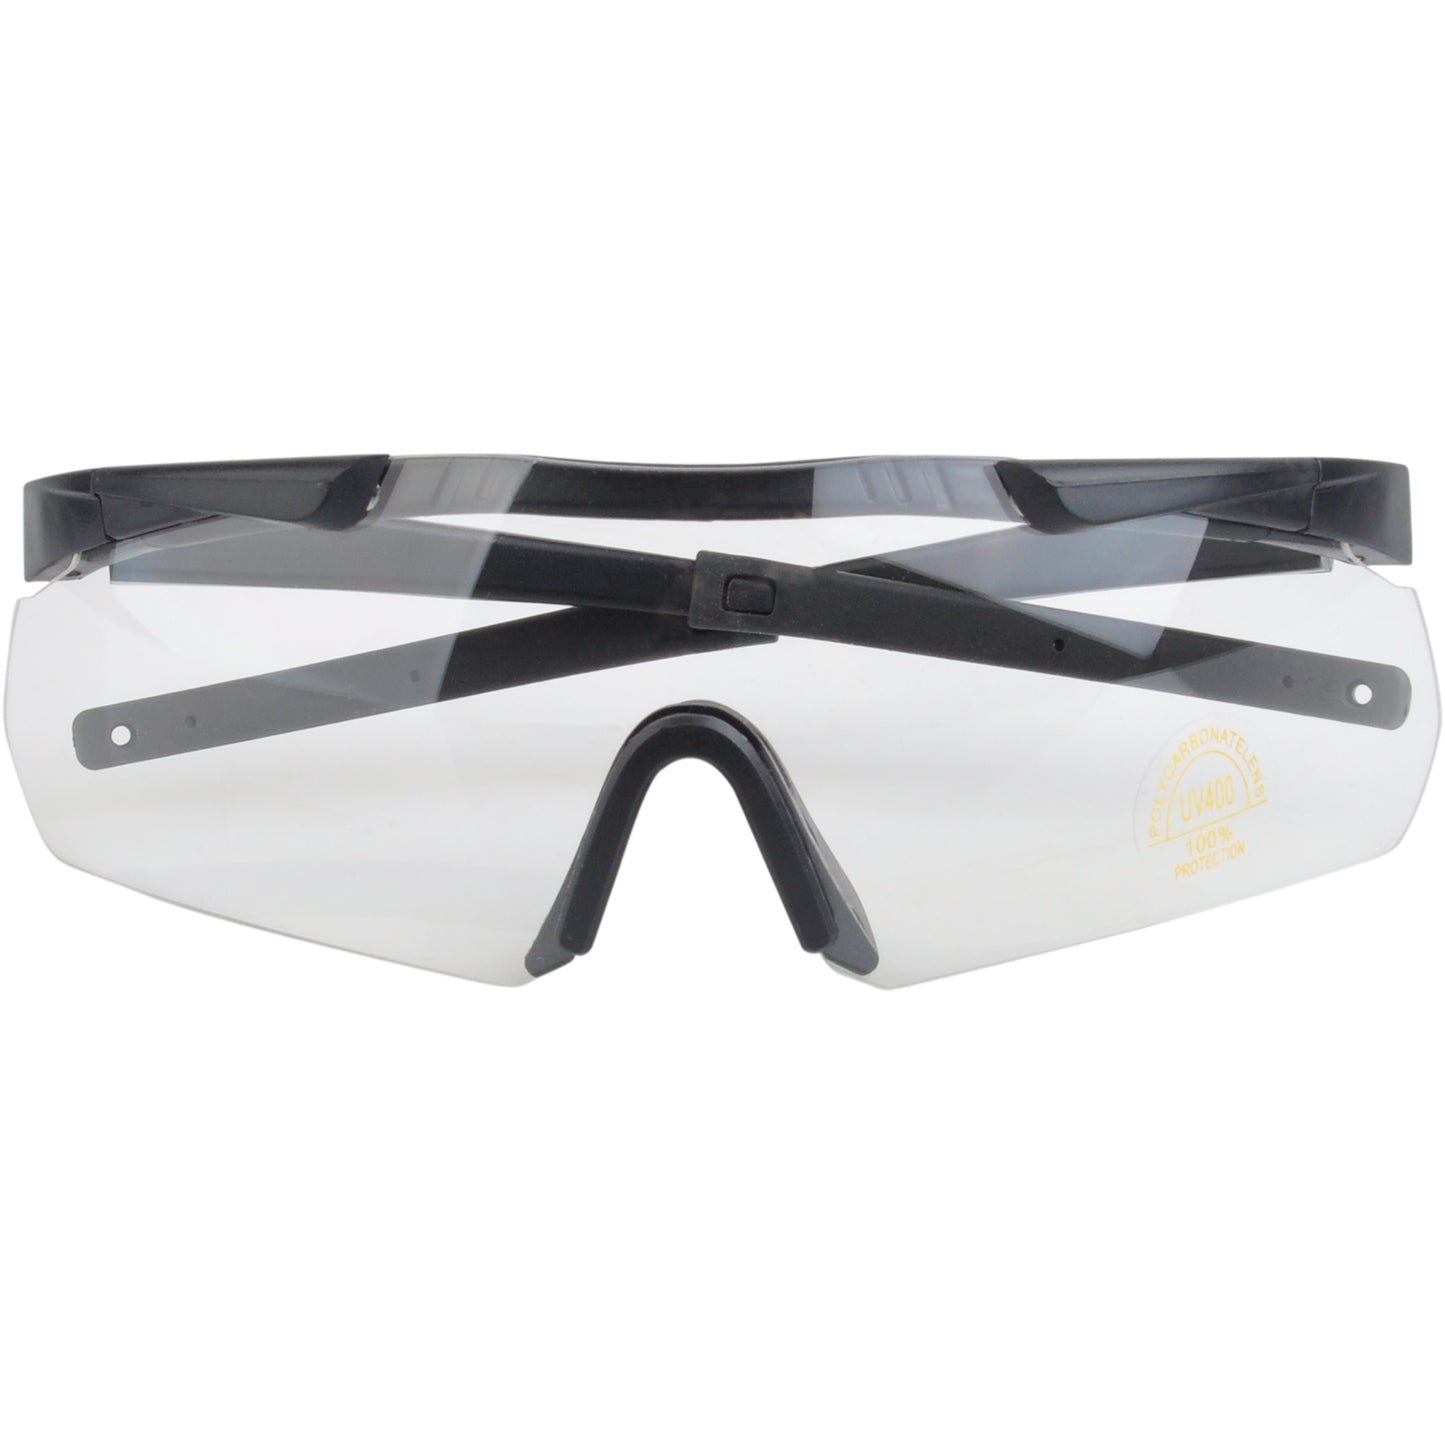 3.0mm Lens Anti-shock Action Shooting Glasses Tactical Eye Protective Eyewear